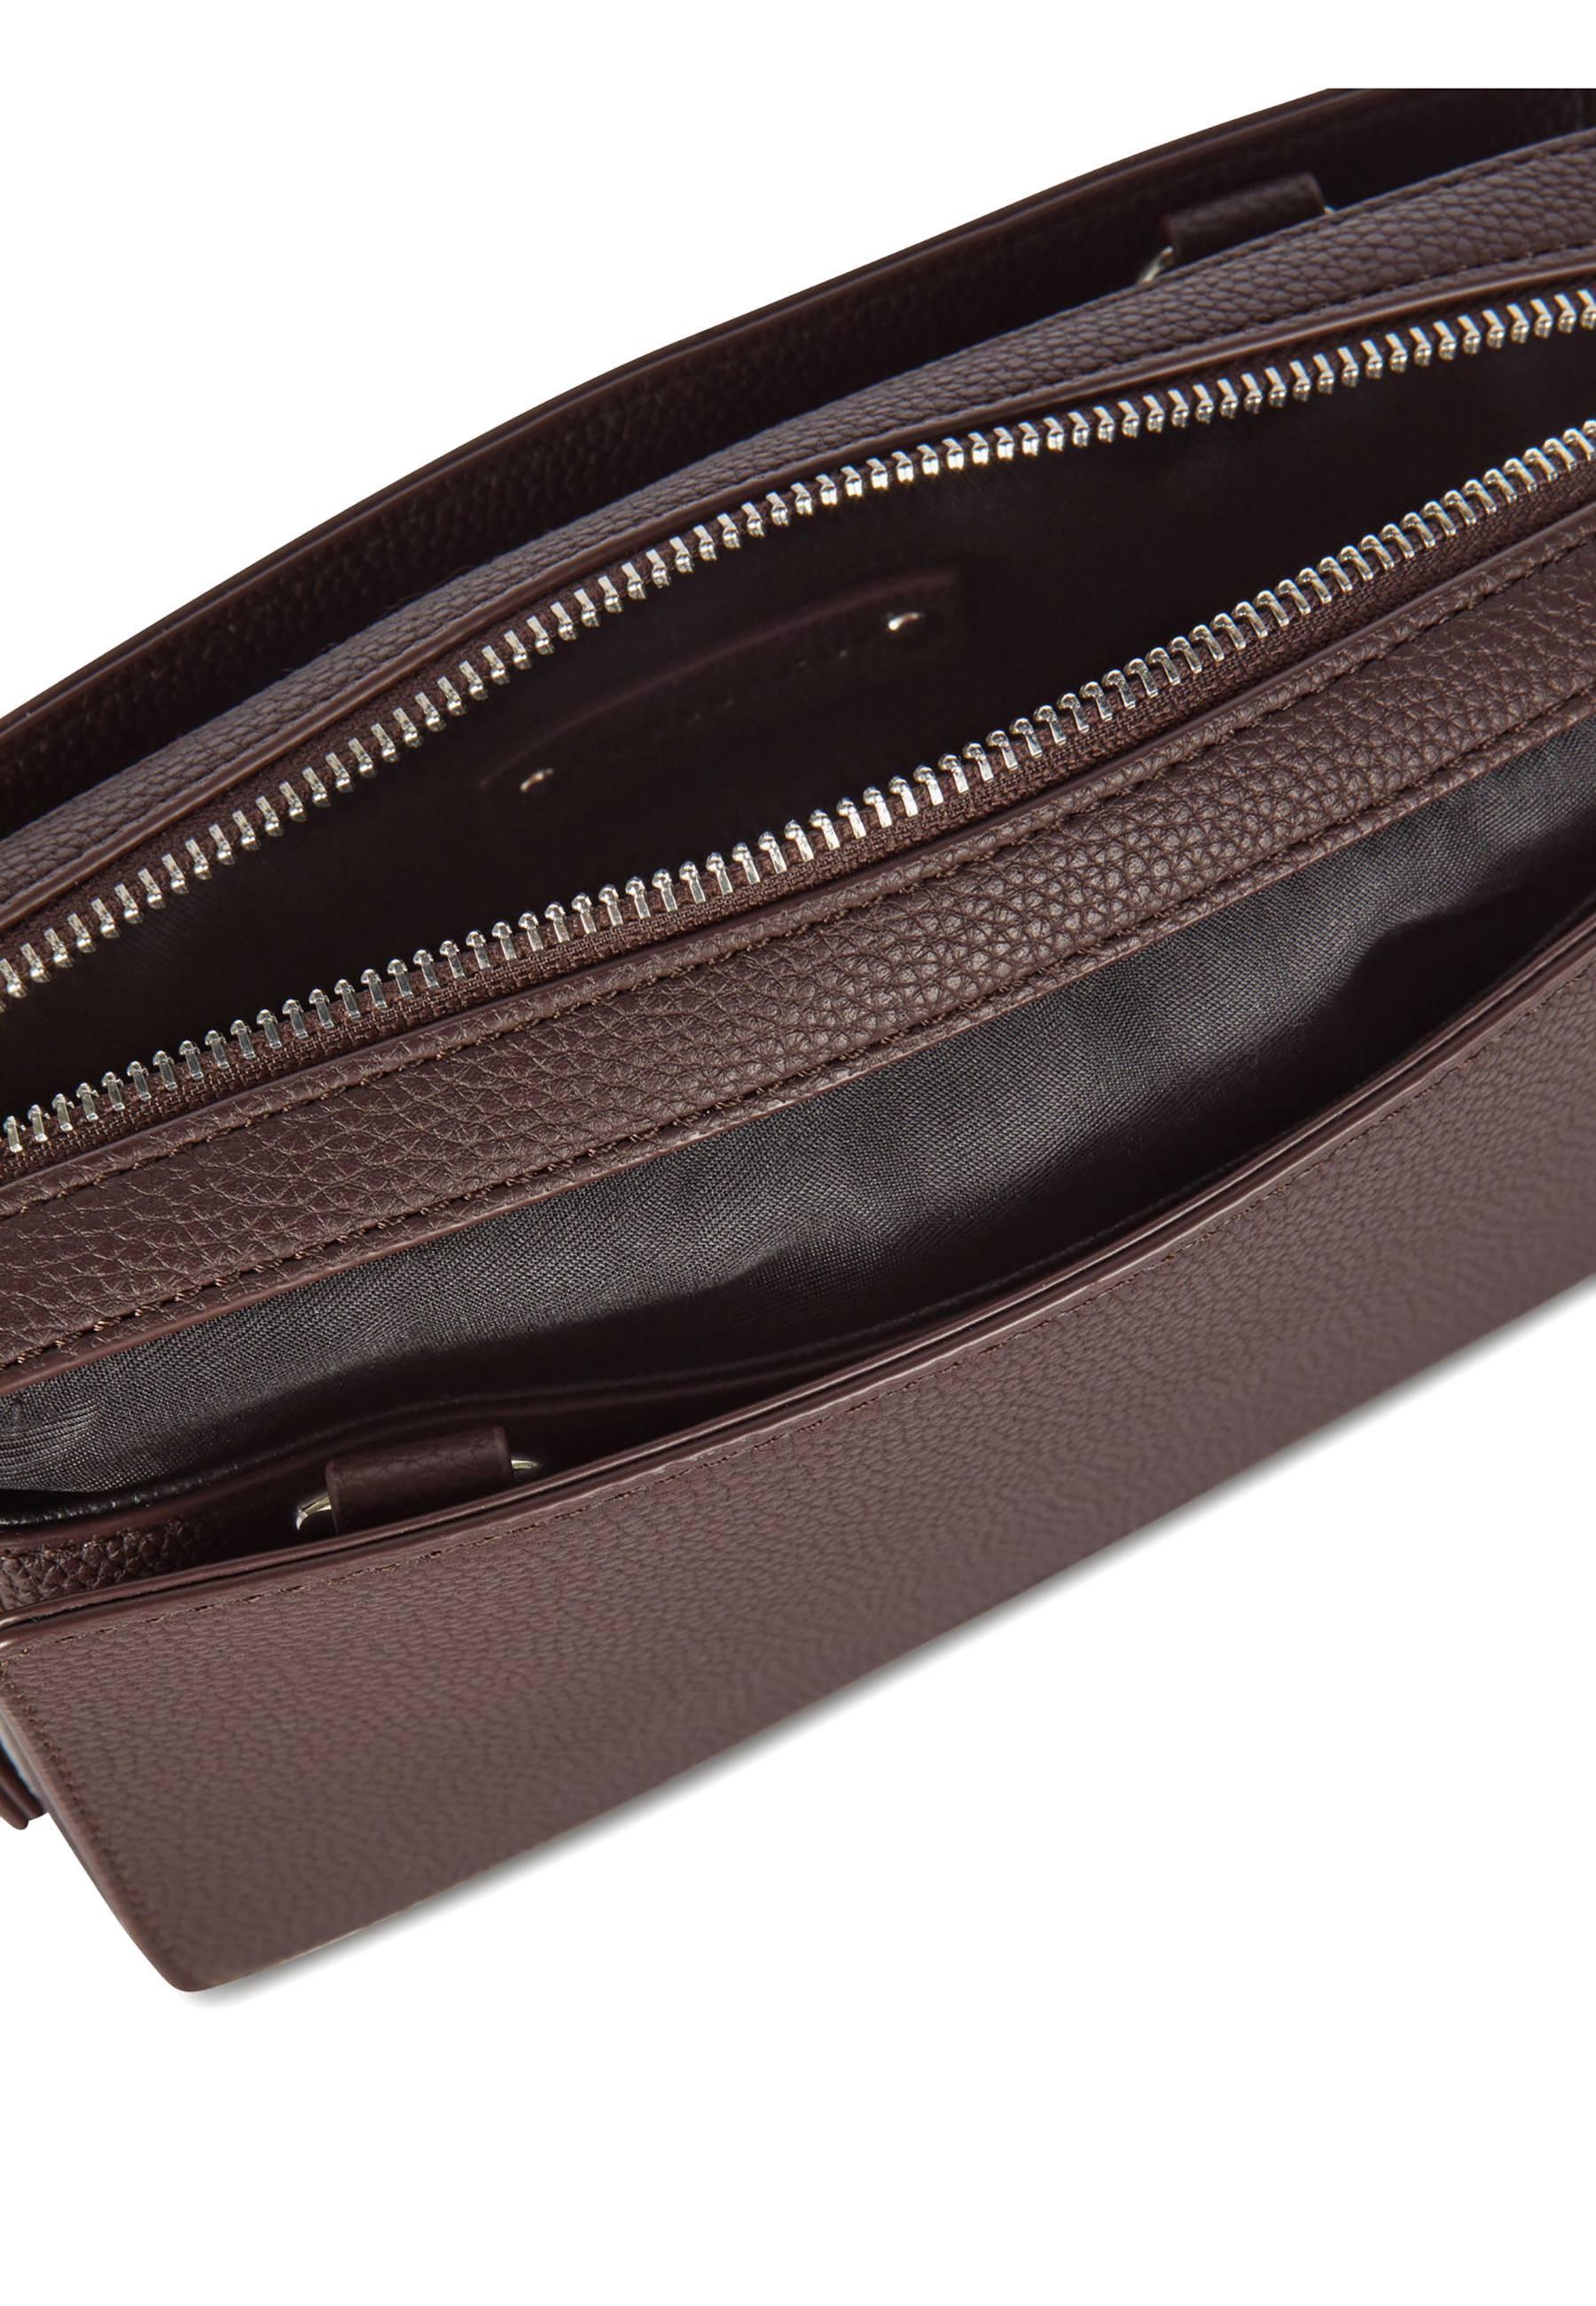 TRUSSARDI Nadir Camera Bag Tracolla Chocolate Plum 75B01367 - Sandrini Calzature e Abbigliamento